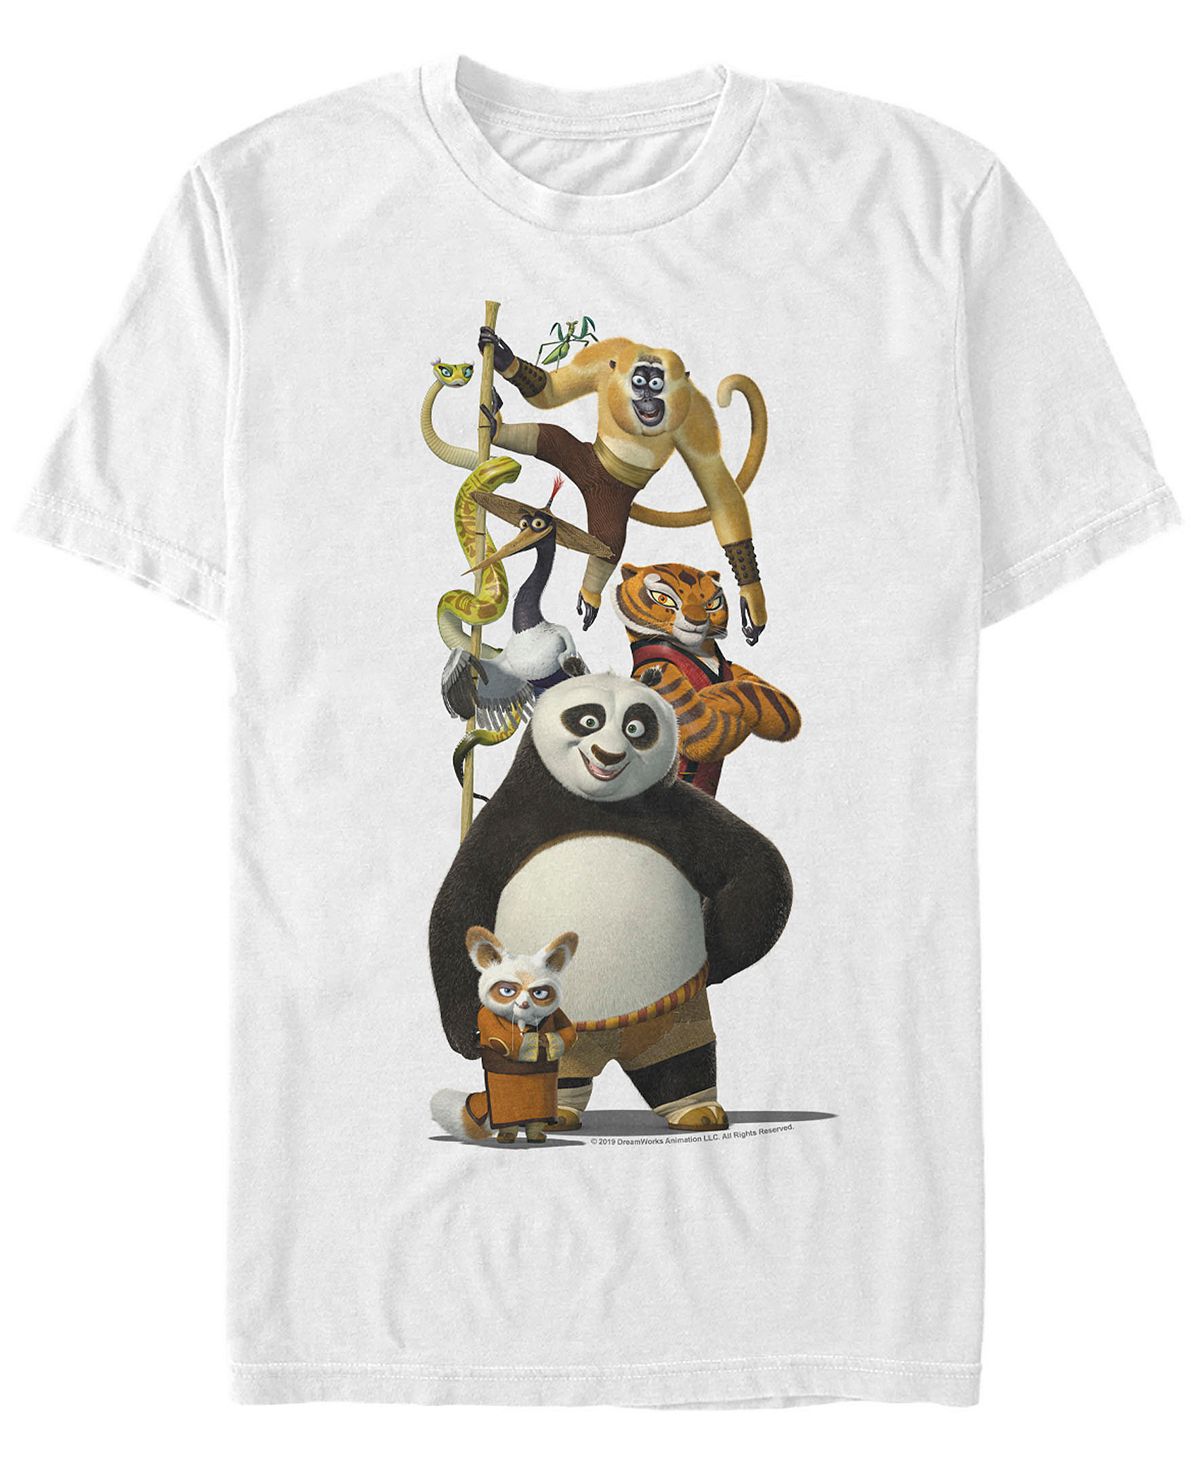 цена Мужская футболка с короткими рукавами по и друзья кунг-фу панда Fifth Sun, белый